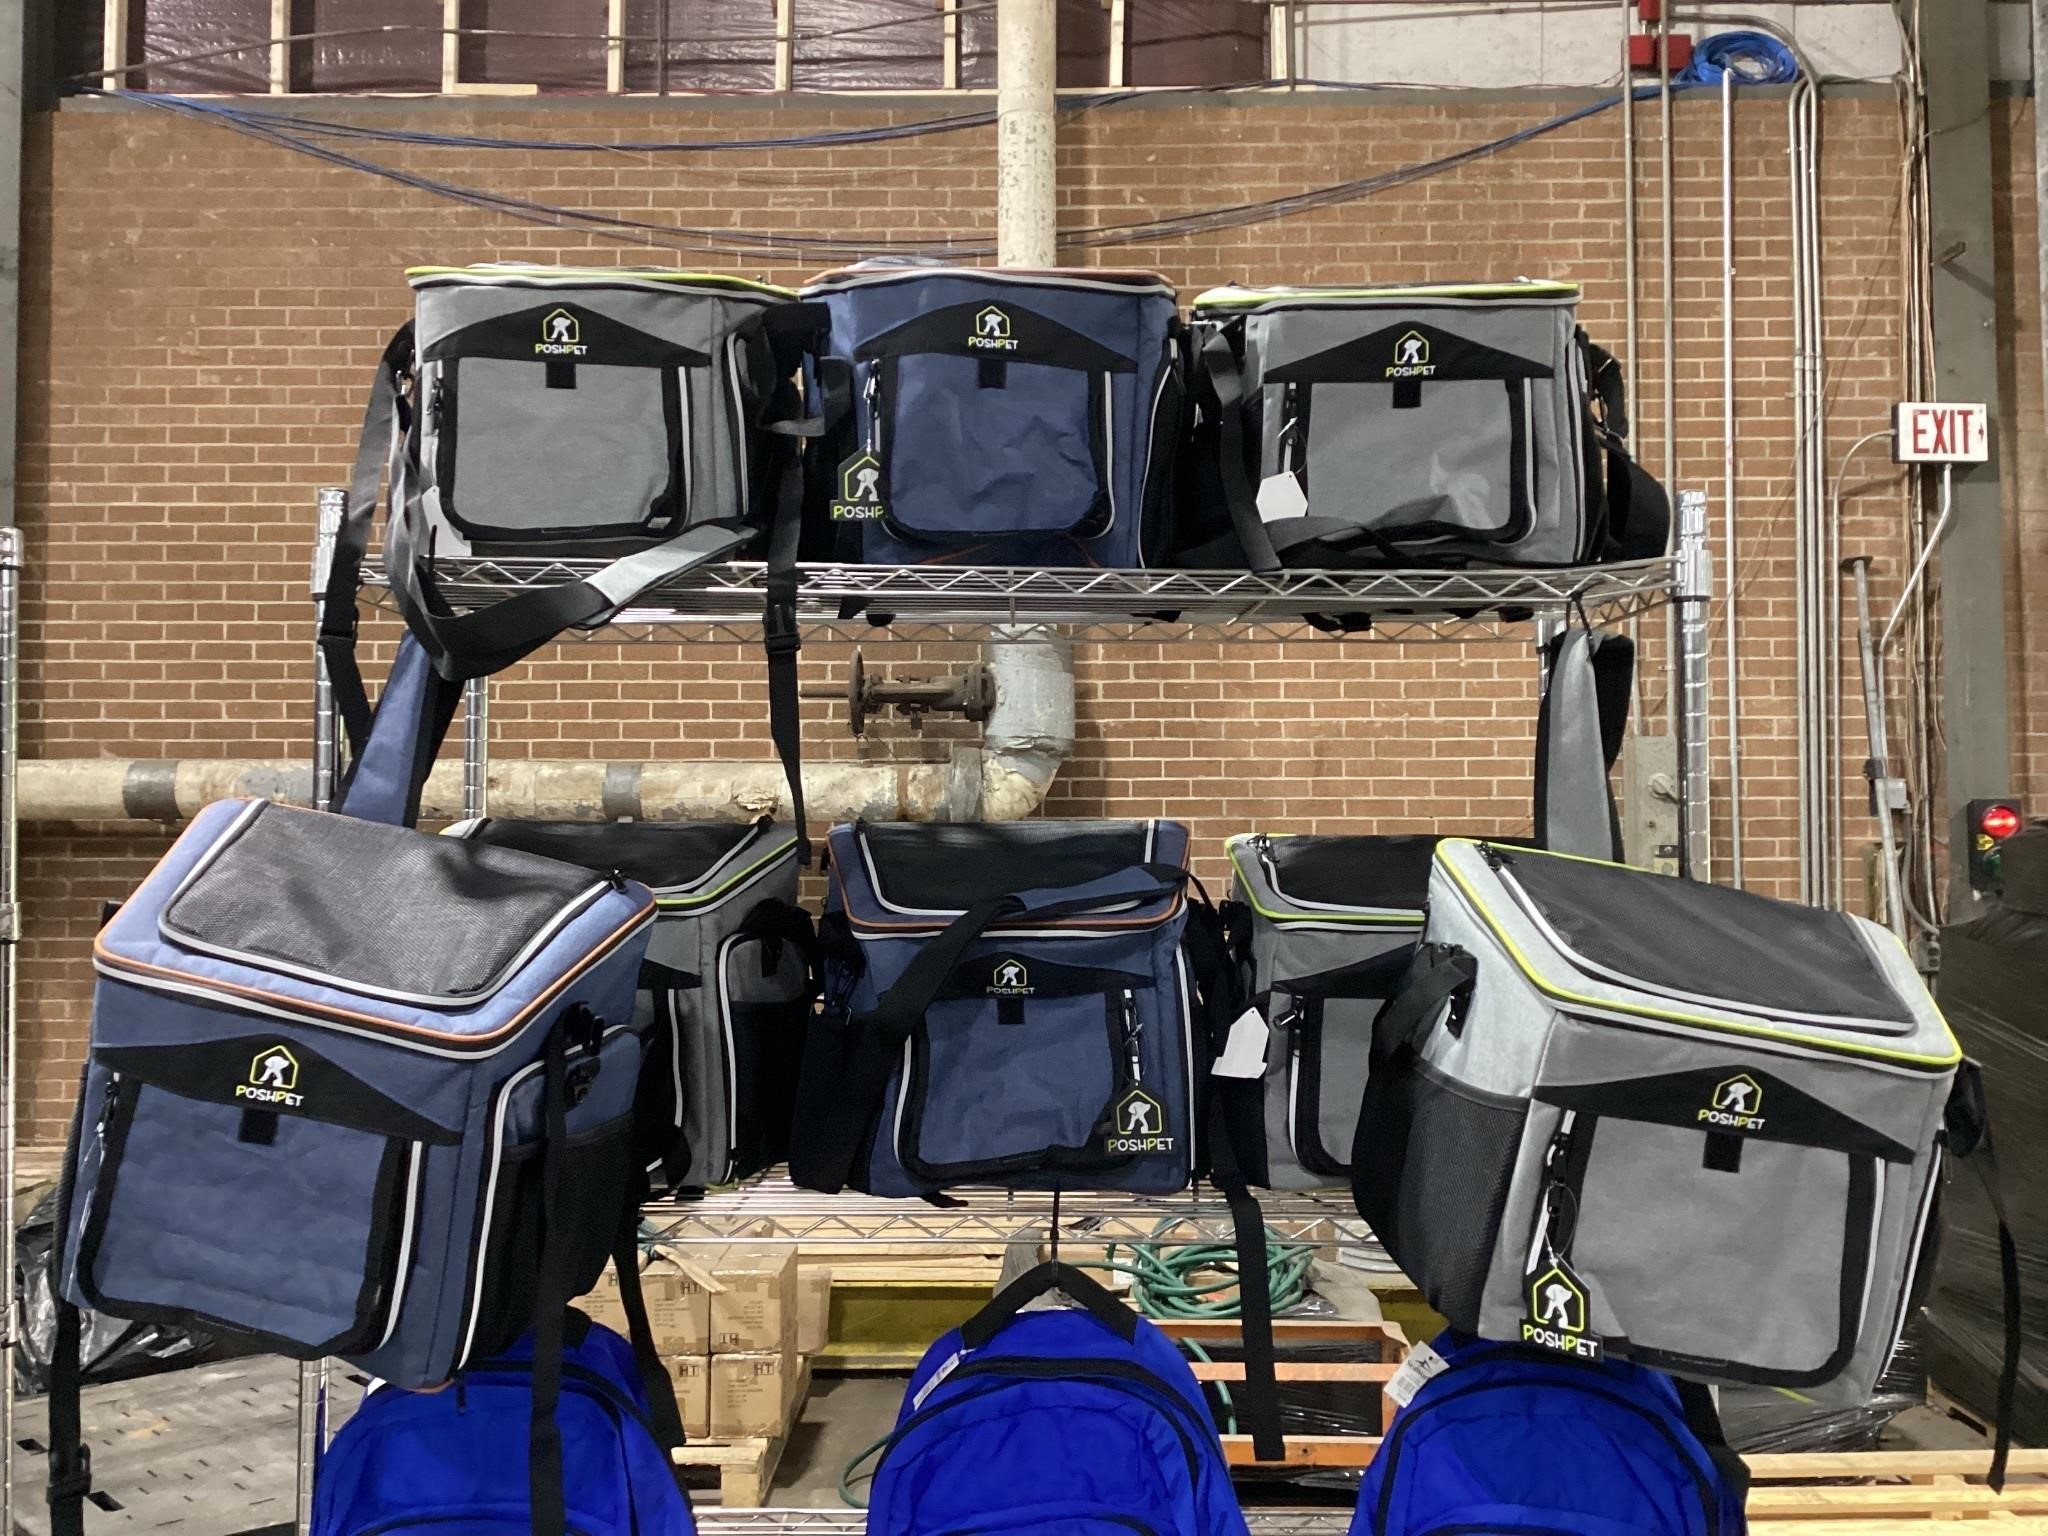 Poshpet Coolers / SeaWorld Backpacks